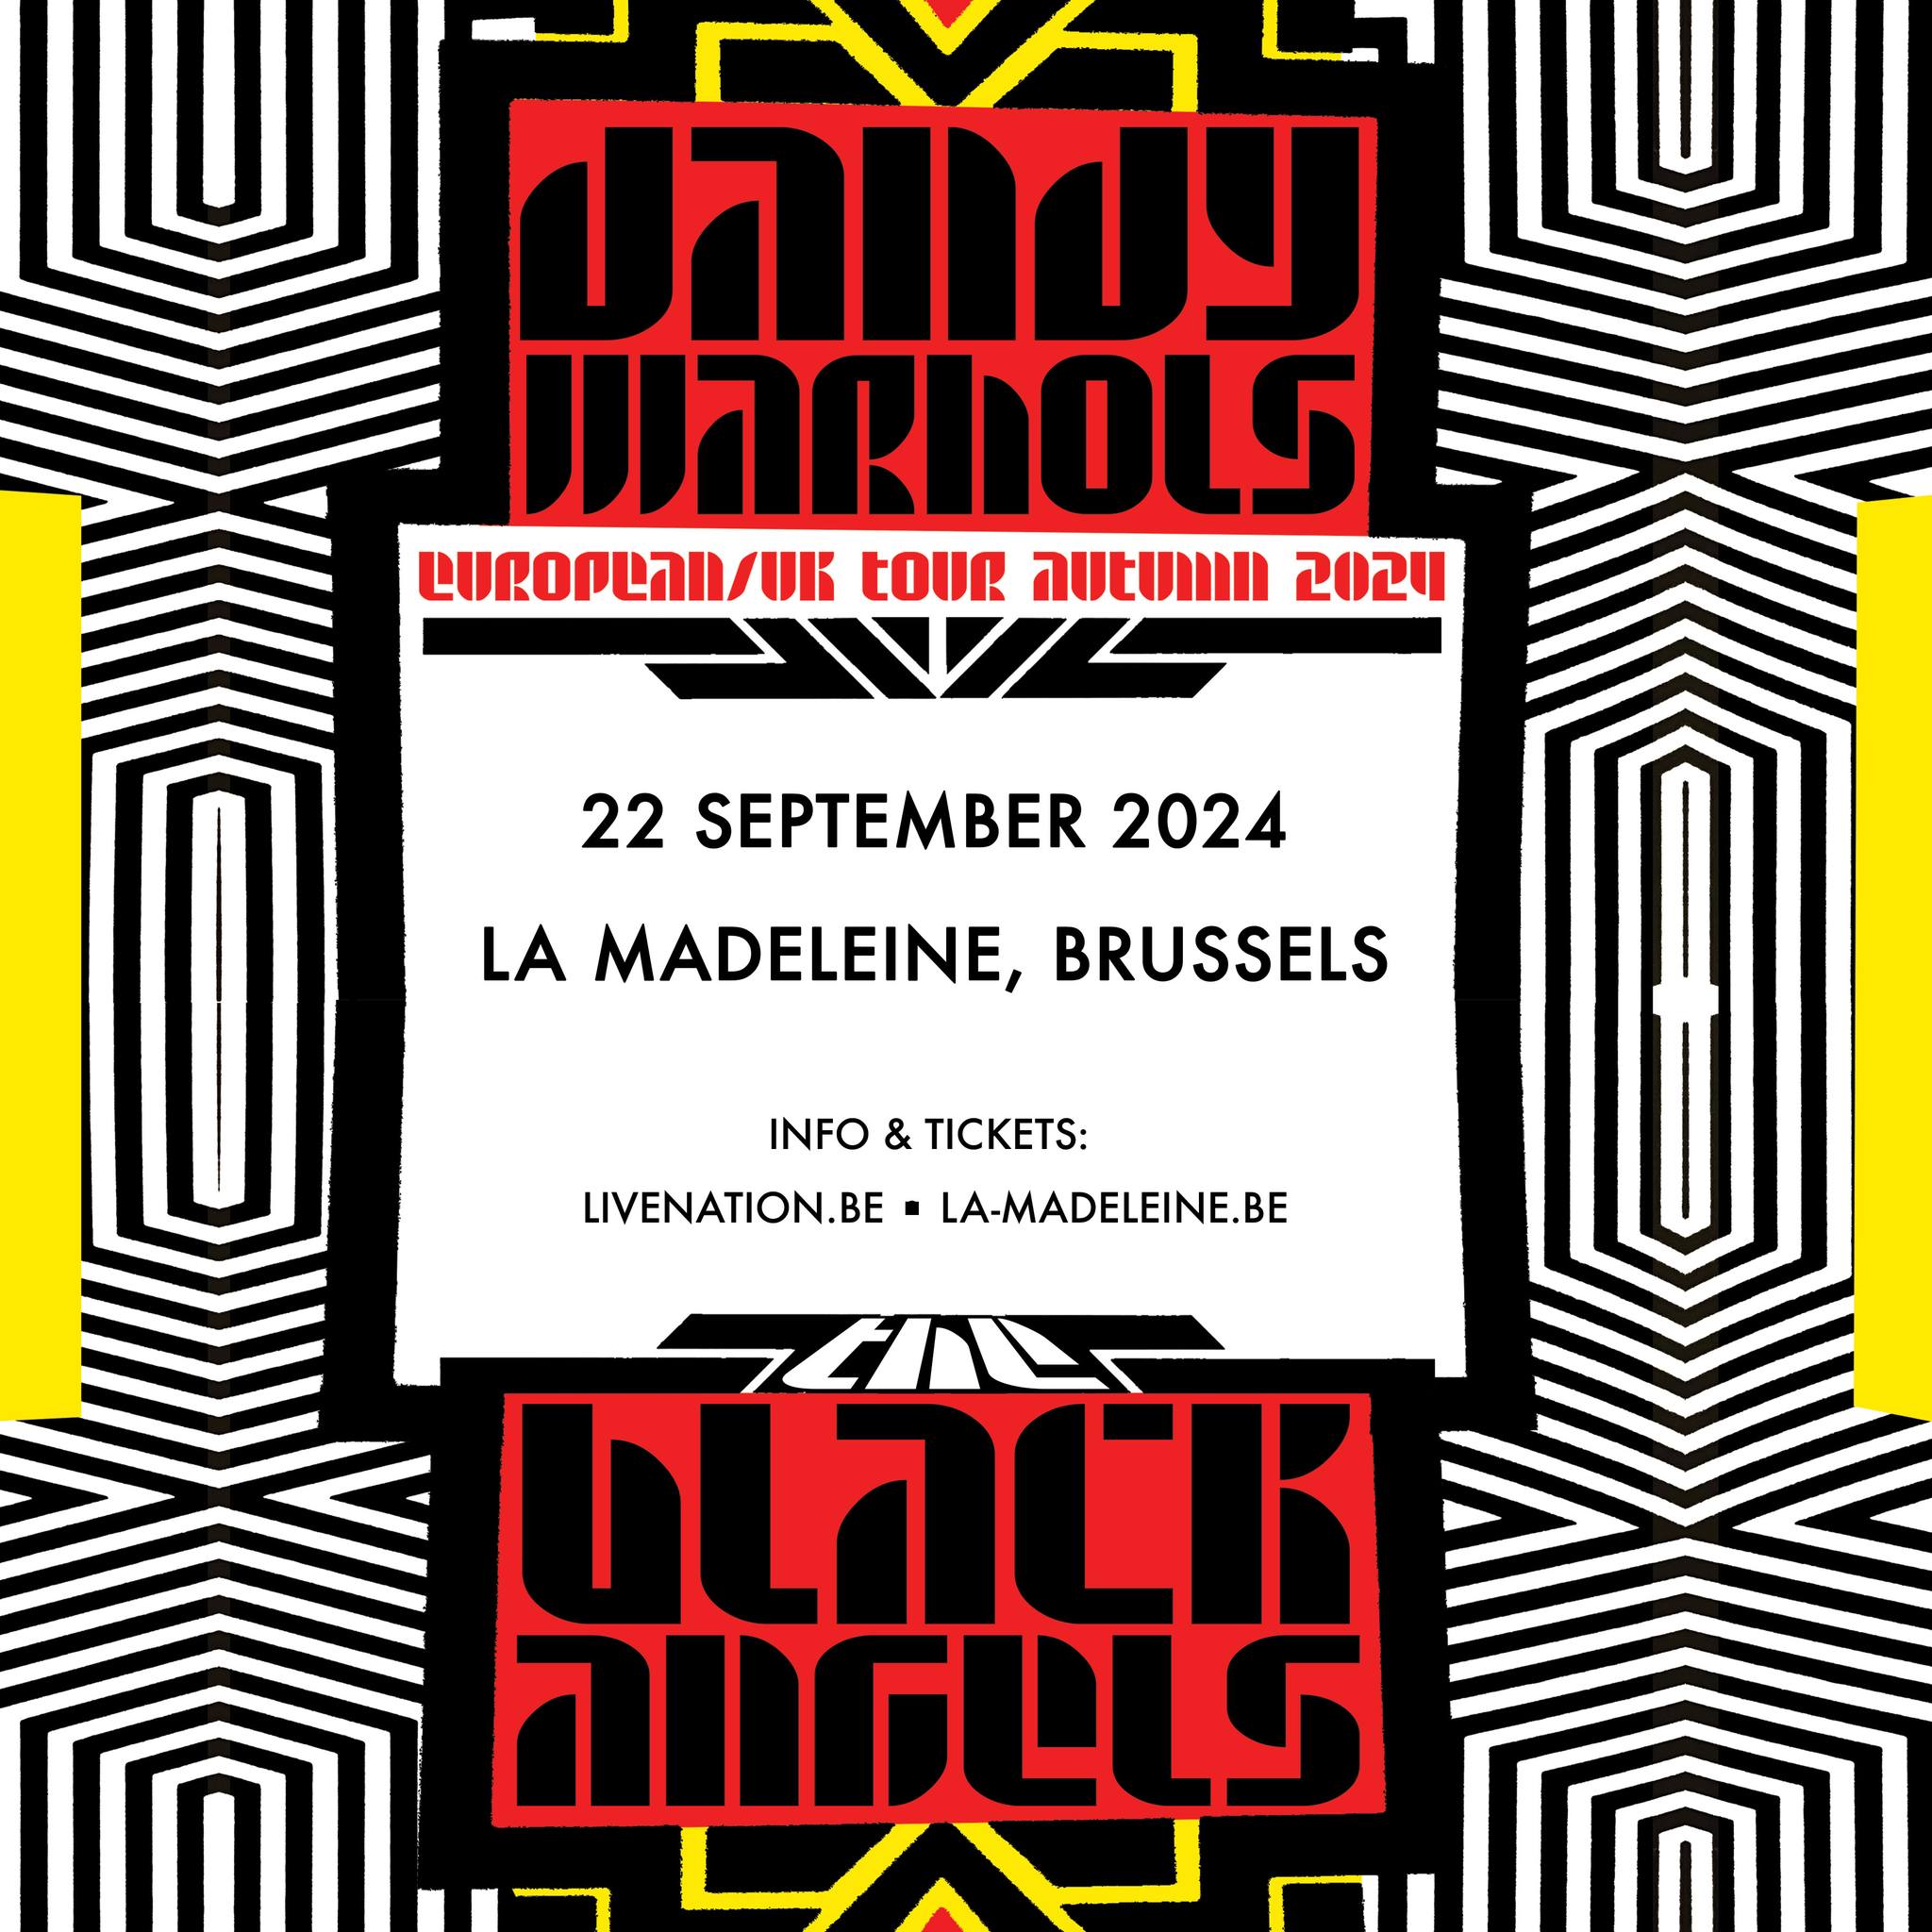 The Dandy Warhols - The Black Keys at La Madeleine Tickets